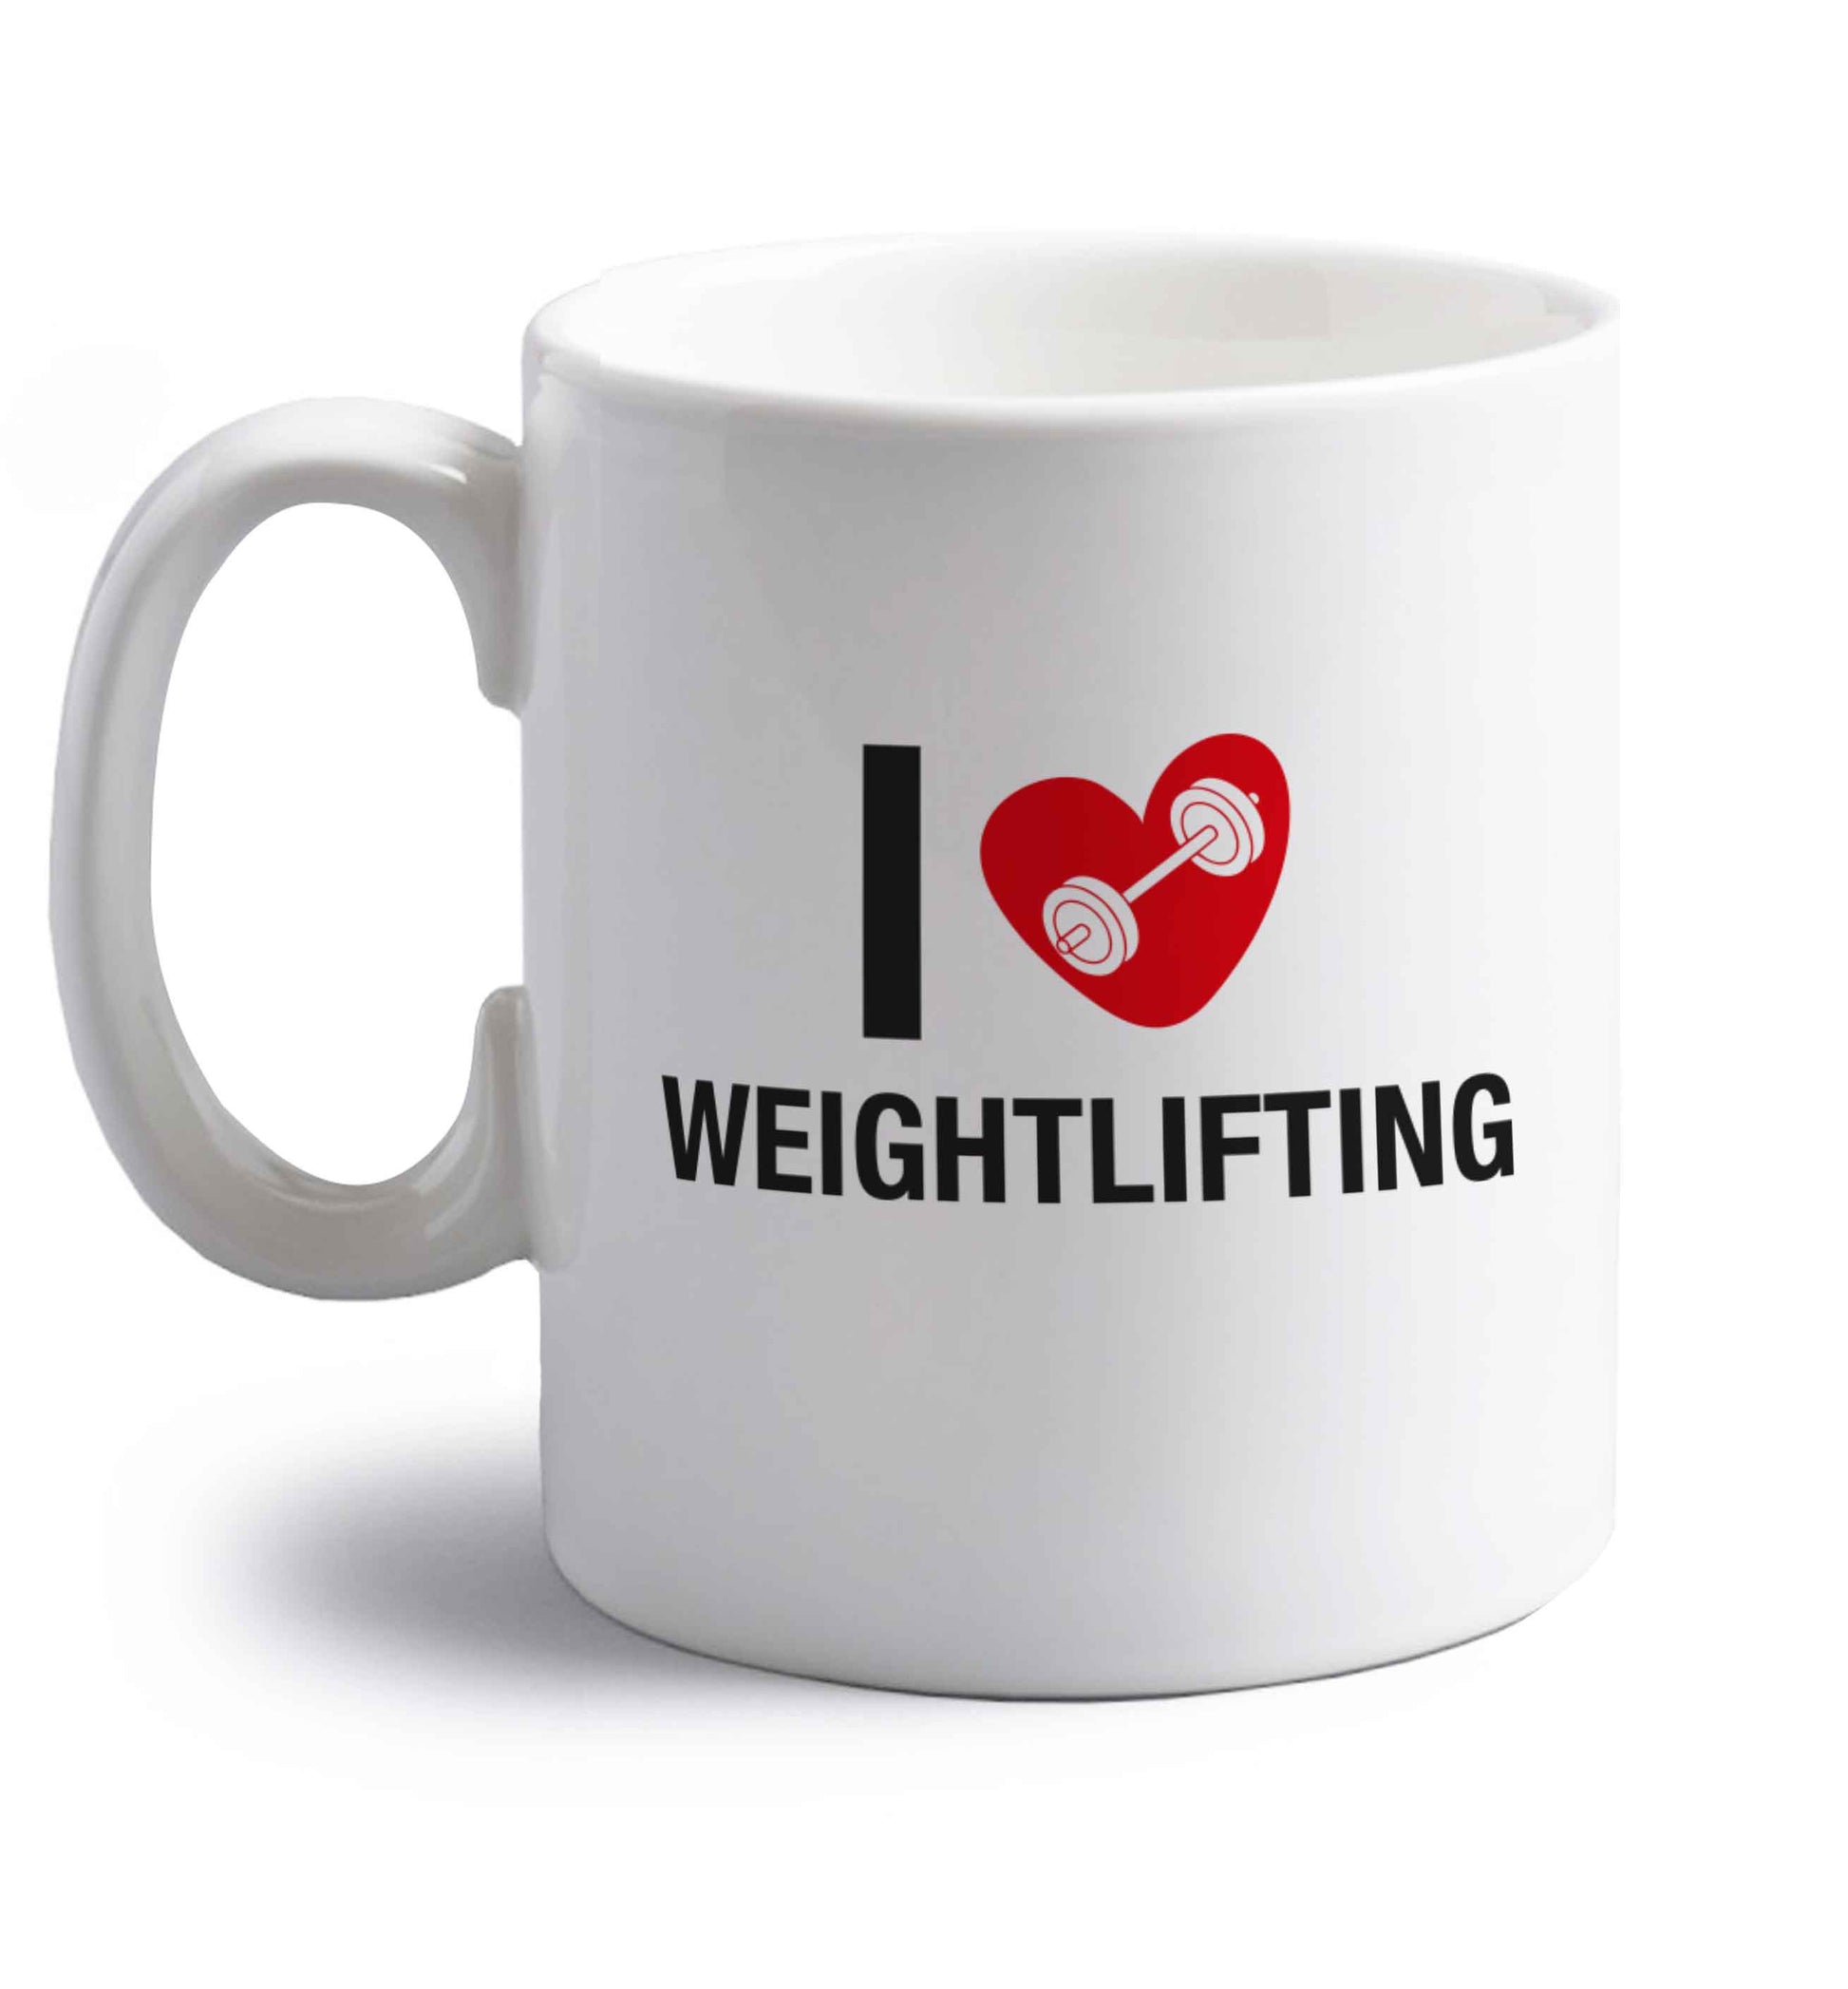 I love weightlifting right handed white ceramic mug 